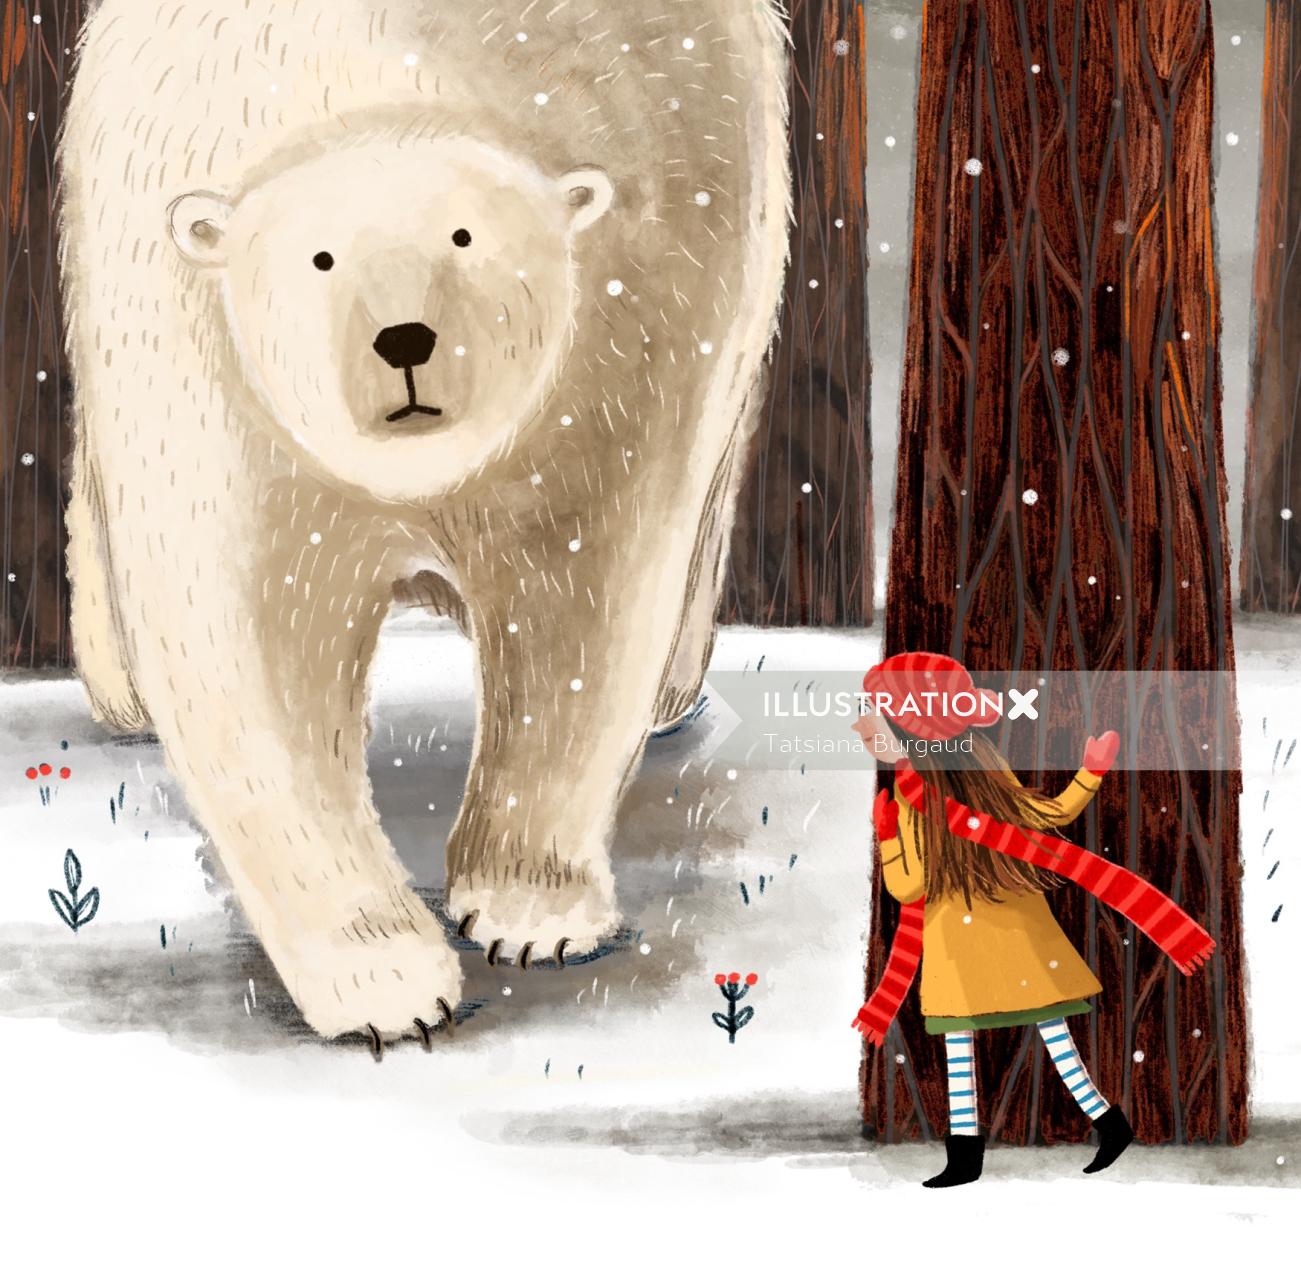 Bear | Illustration by Tatsiana Burgaud